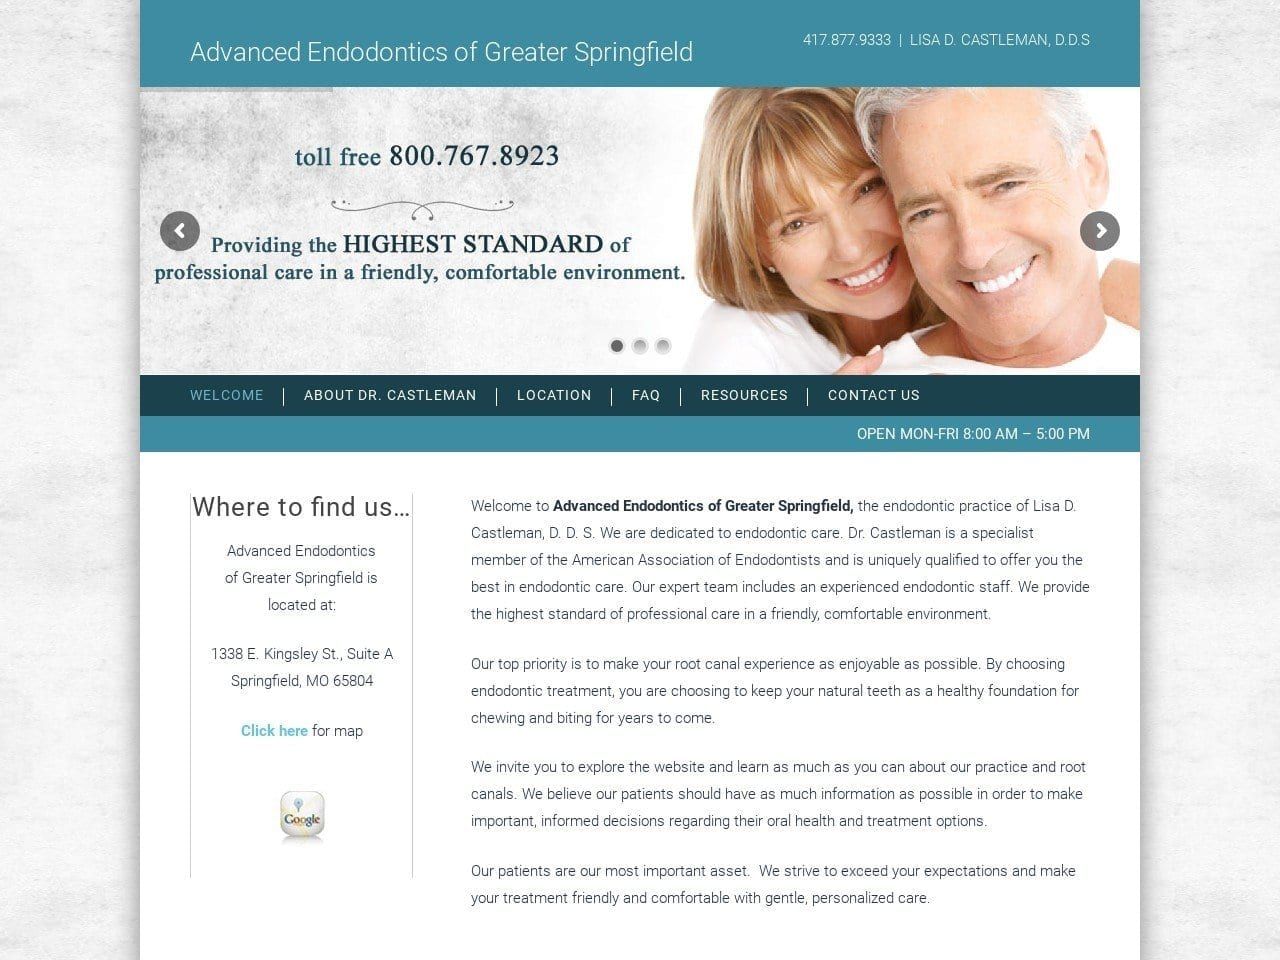 Advanced Endodontics Website Screenshot from bestrootcanals.com